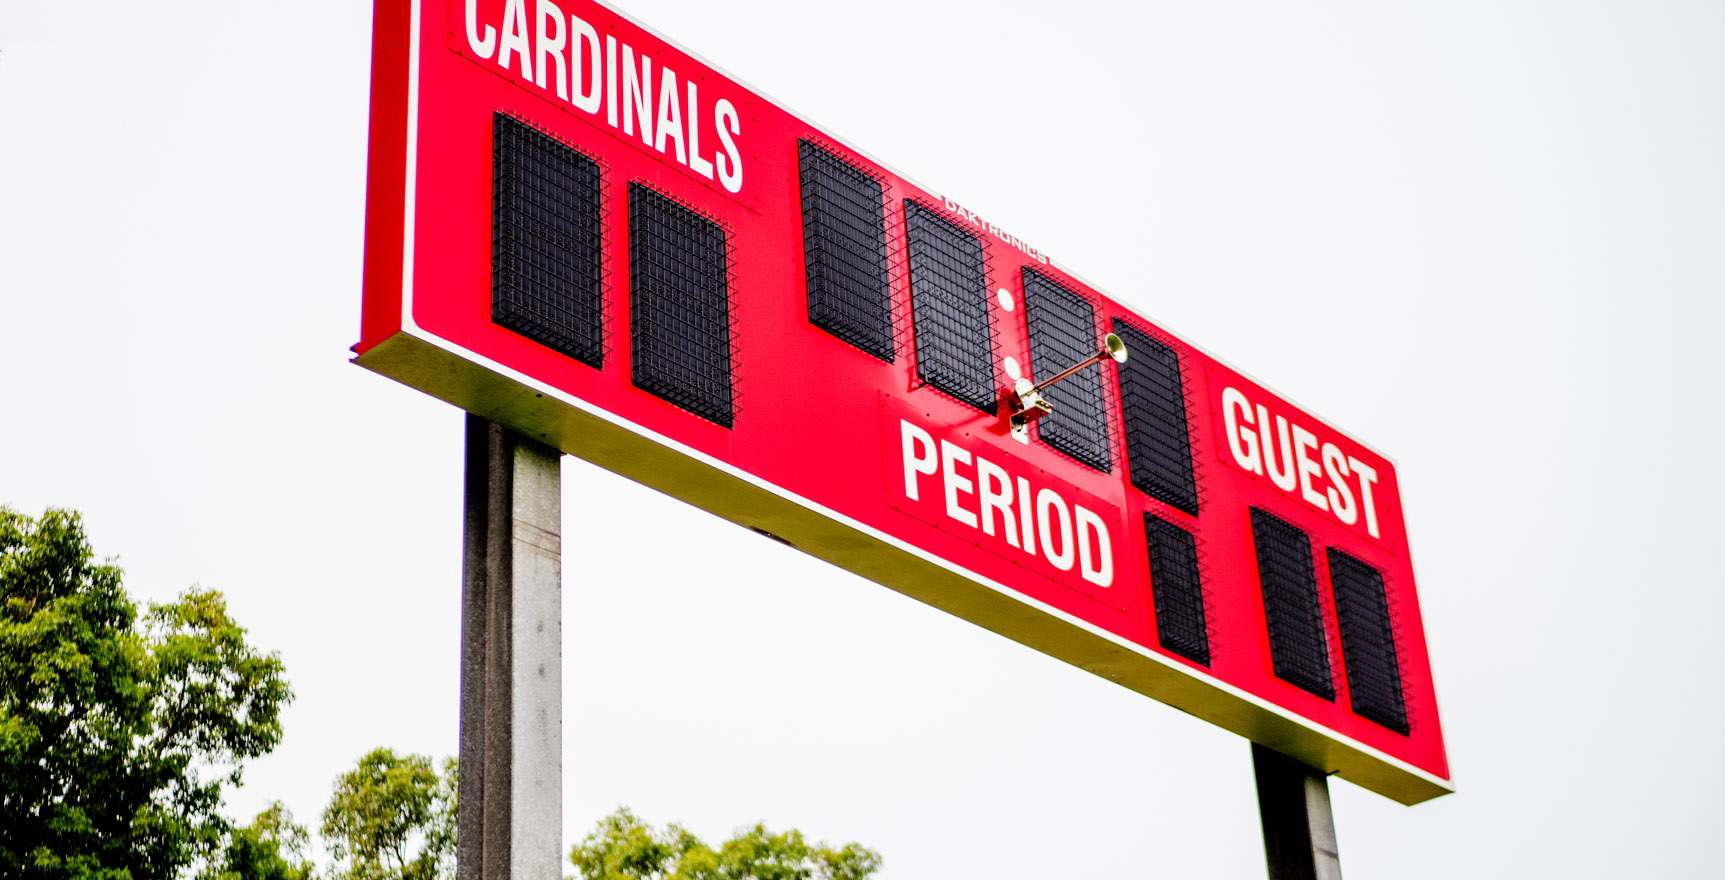 Cardinals Digital Scoreboard